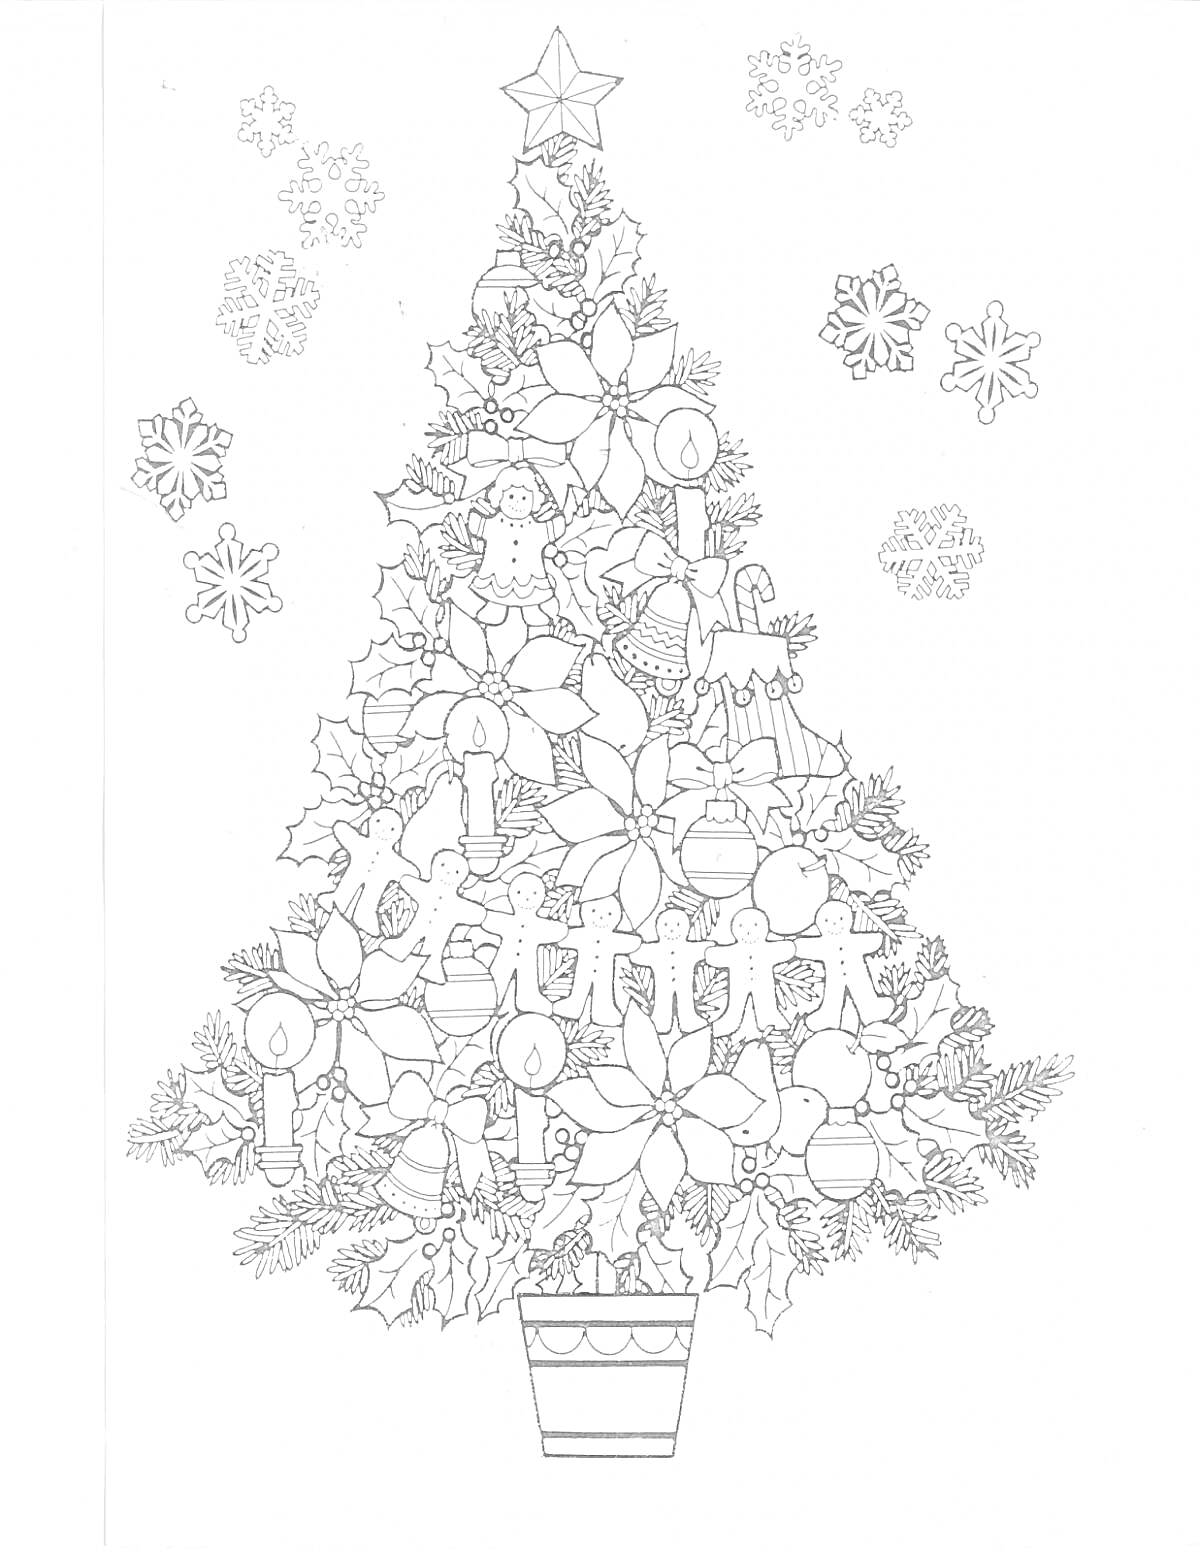 Раскраска Антистресс раскраска елка с игрушками, цветами пуансеттии, свечами и снежинками